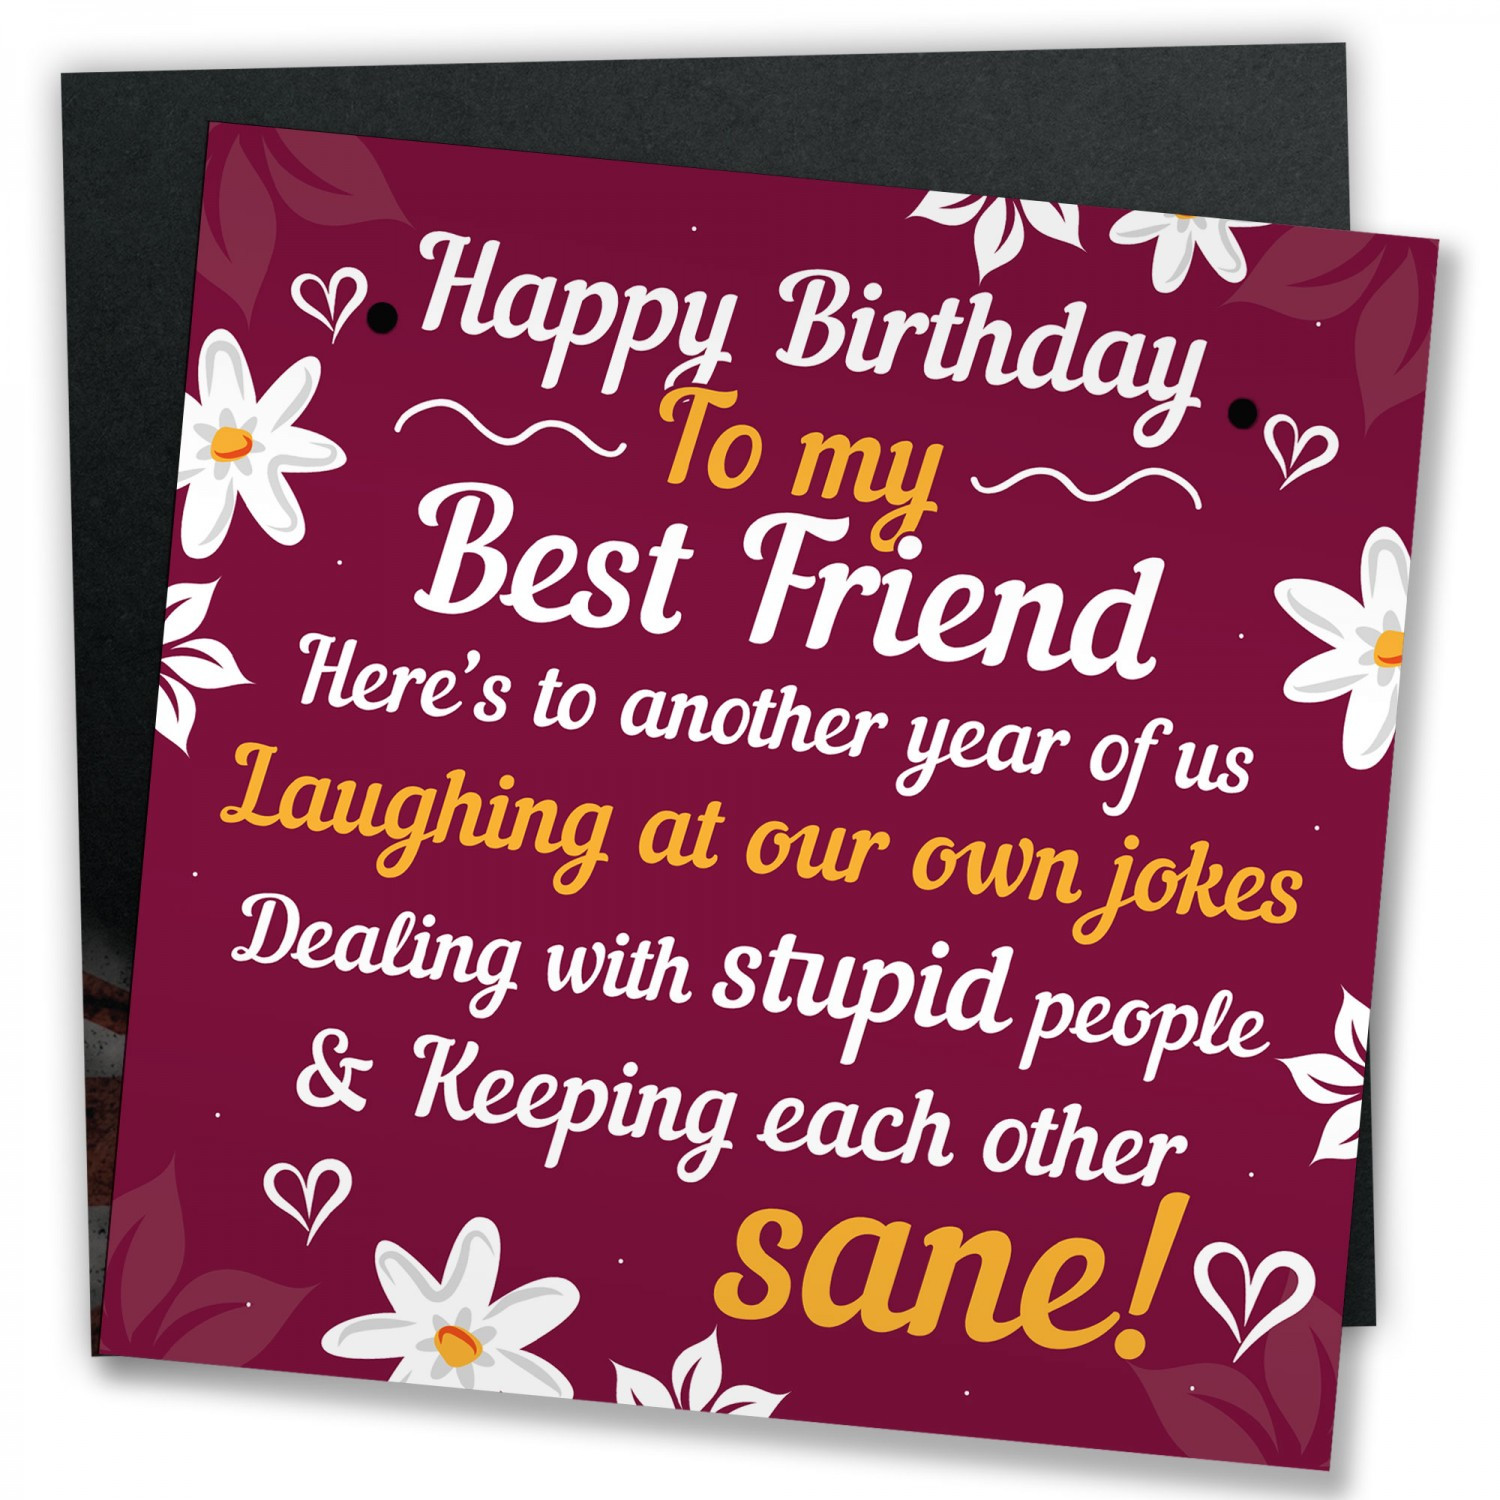 Best Friend Gifts For Birthday
 HAPPY BIRTHDAY Card Best Friend Birthday Gift Friendship